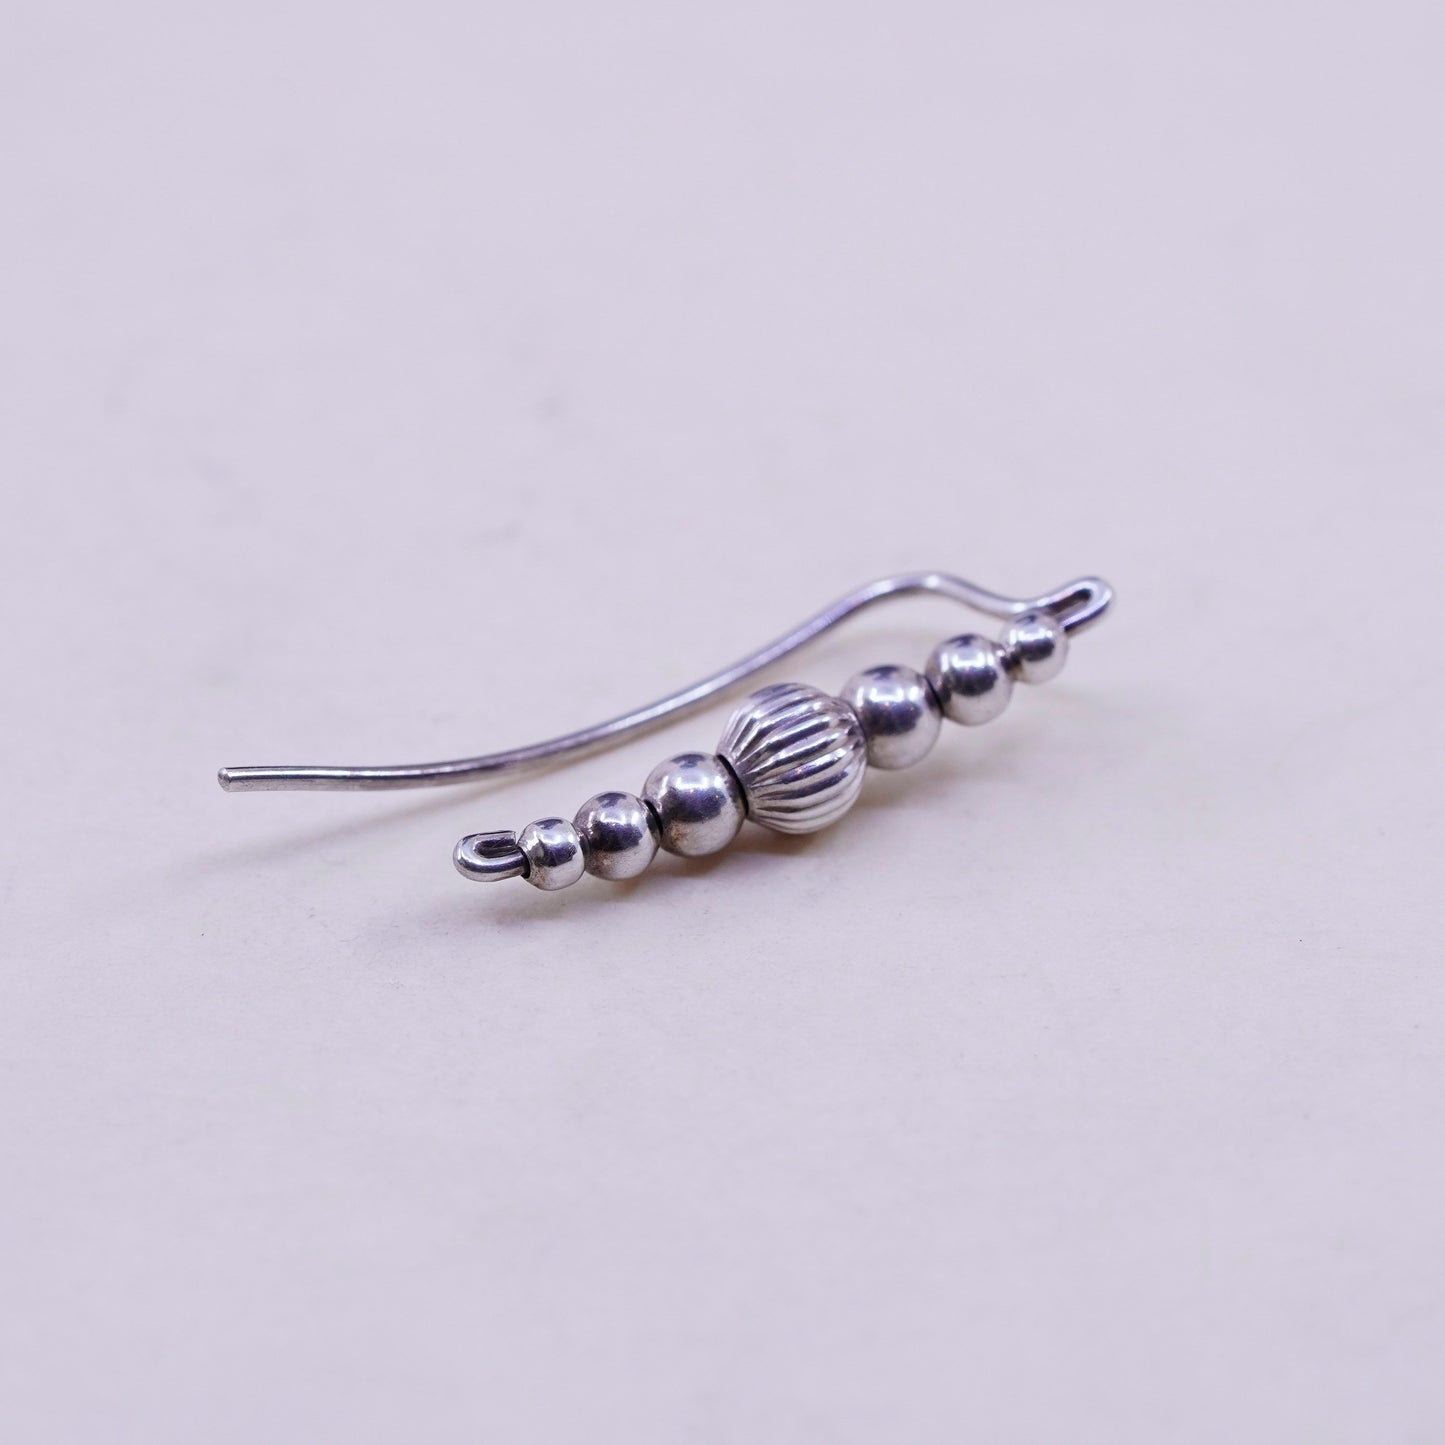 Vintage Sterling 925 silver handmade earrings and beads